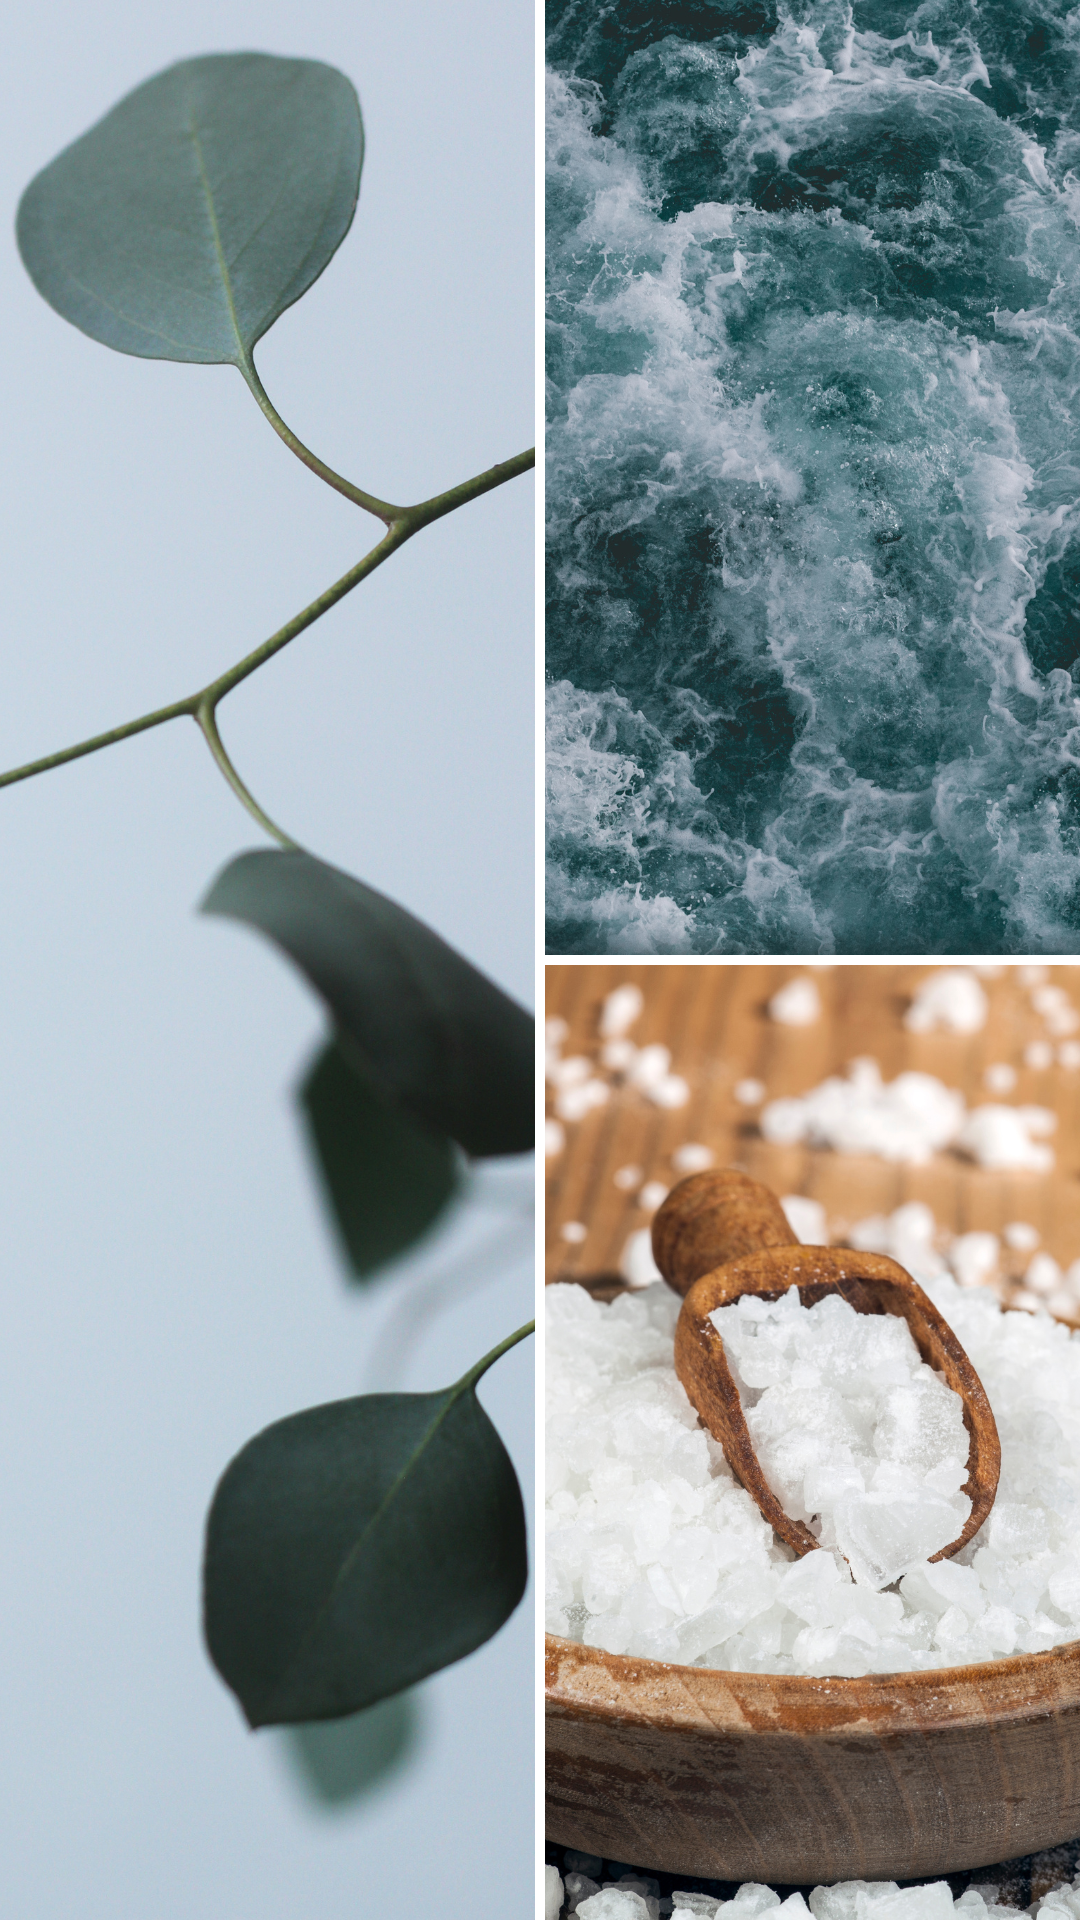 Bougie de soja avec mèche de bois | Eucalyptus & sel de mer